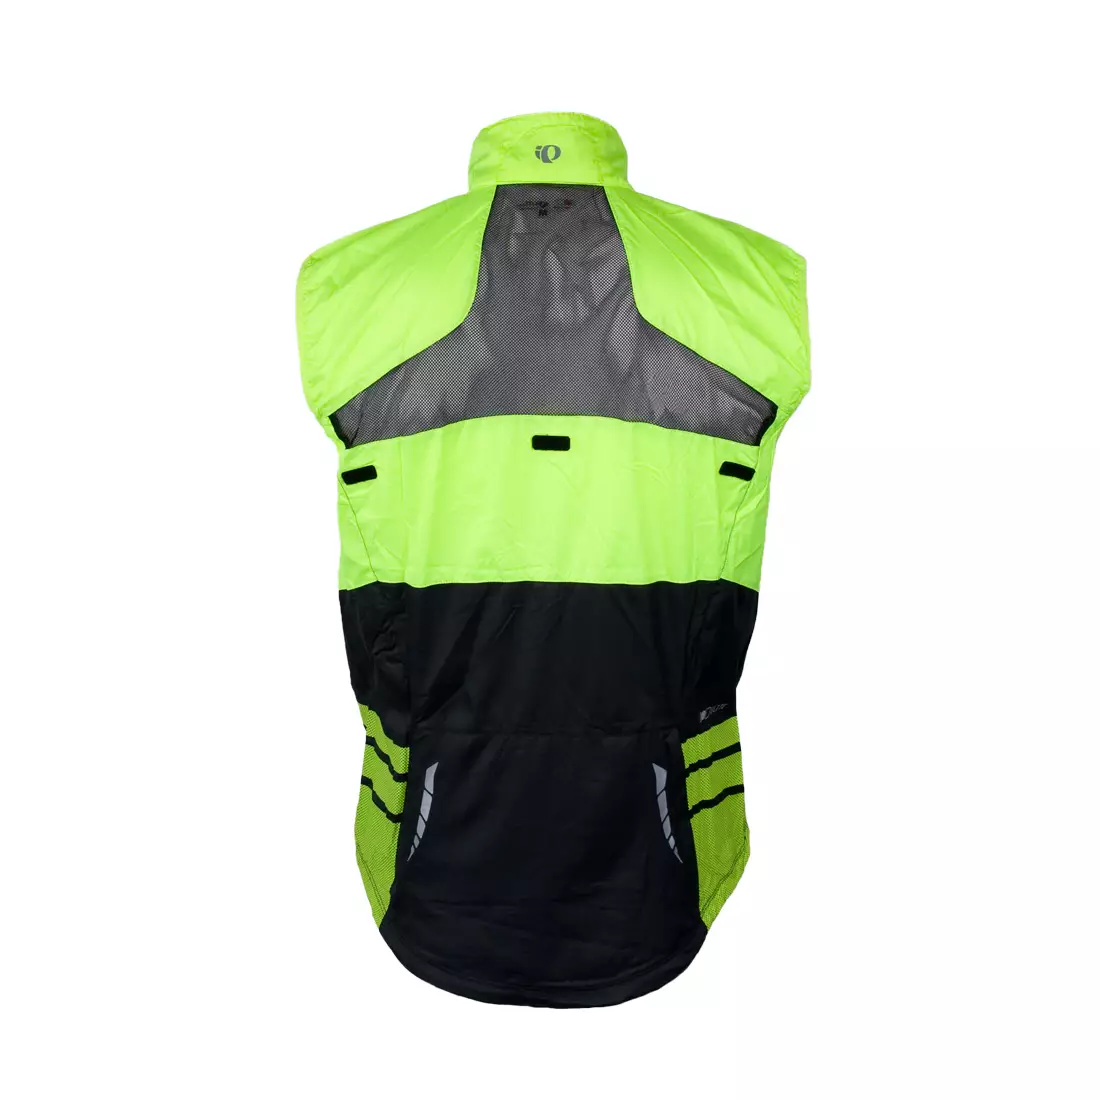 PEARL IZUMI - ELITE Barrier Convertible Jacket 11131314-429 - cyklistická bunda-vesta, farba: Fluoro-black